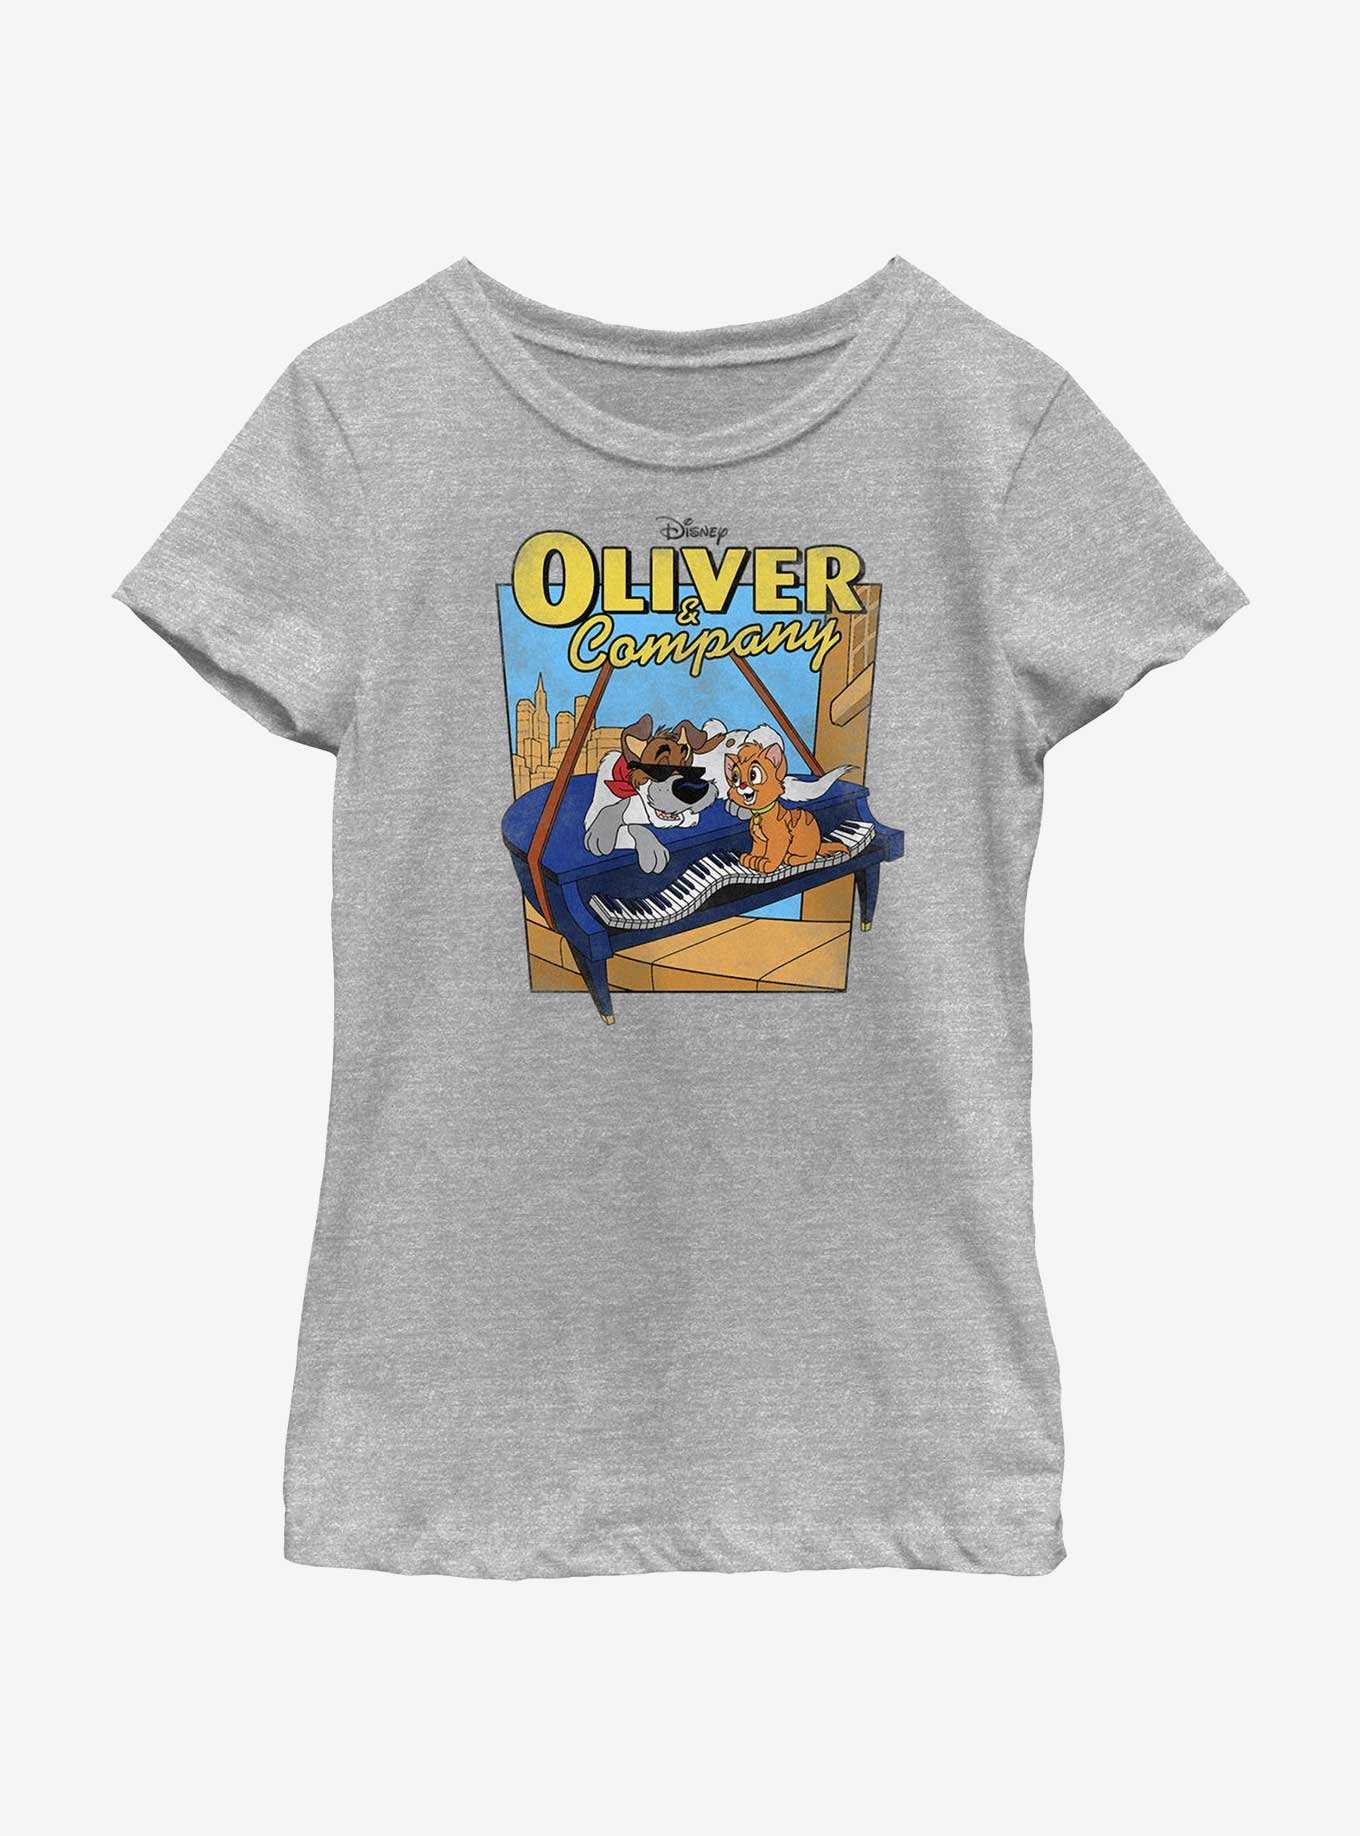 Disney Oliver & Company Piano Youth Girls T-Shirt, , hi-res